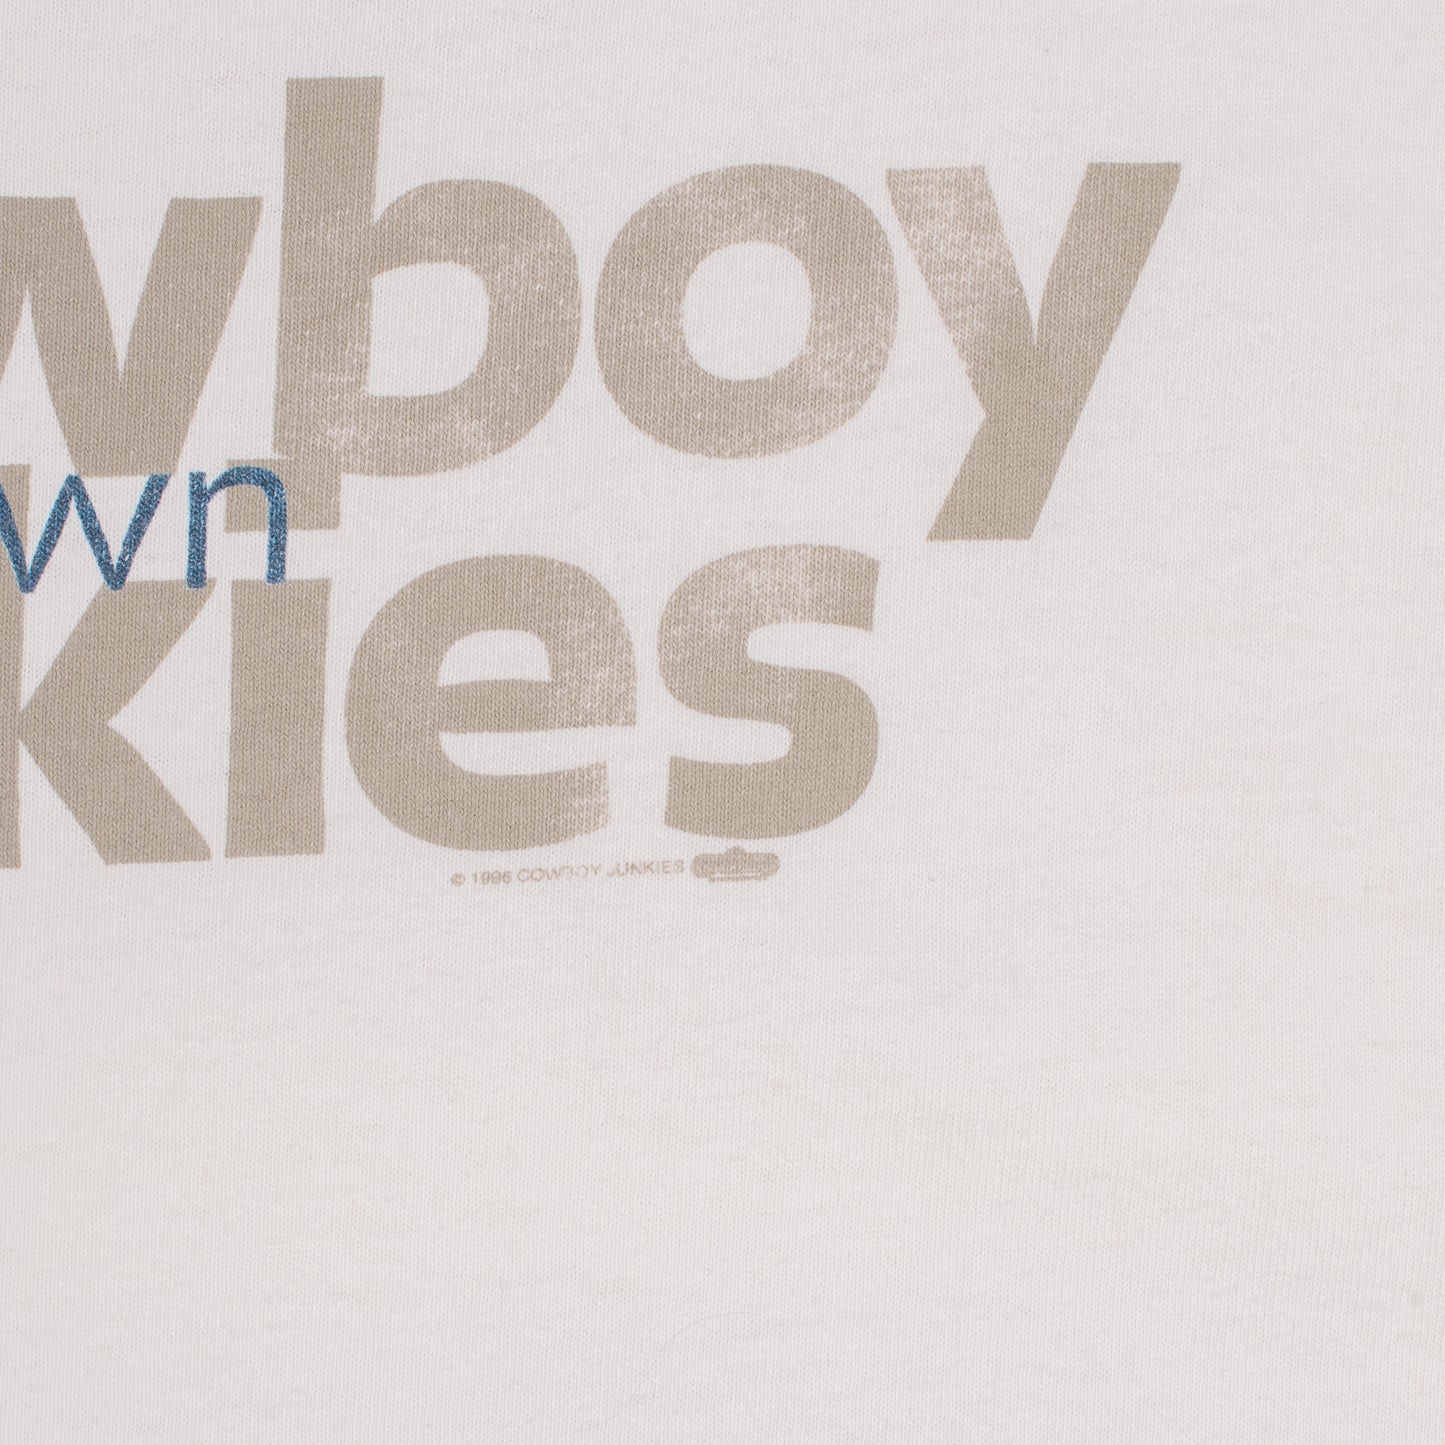 Vintage 1996 Cowboy Junkies T-Shirt